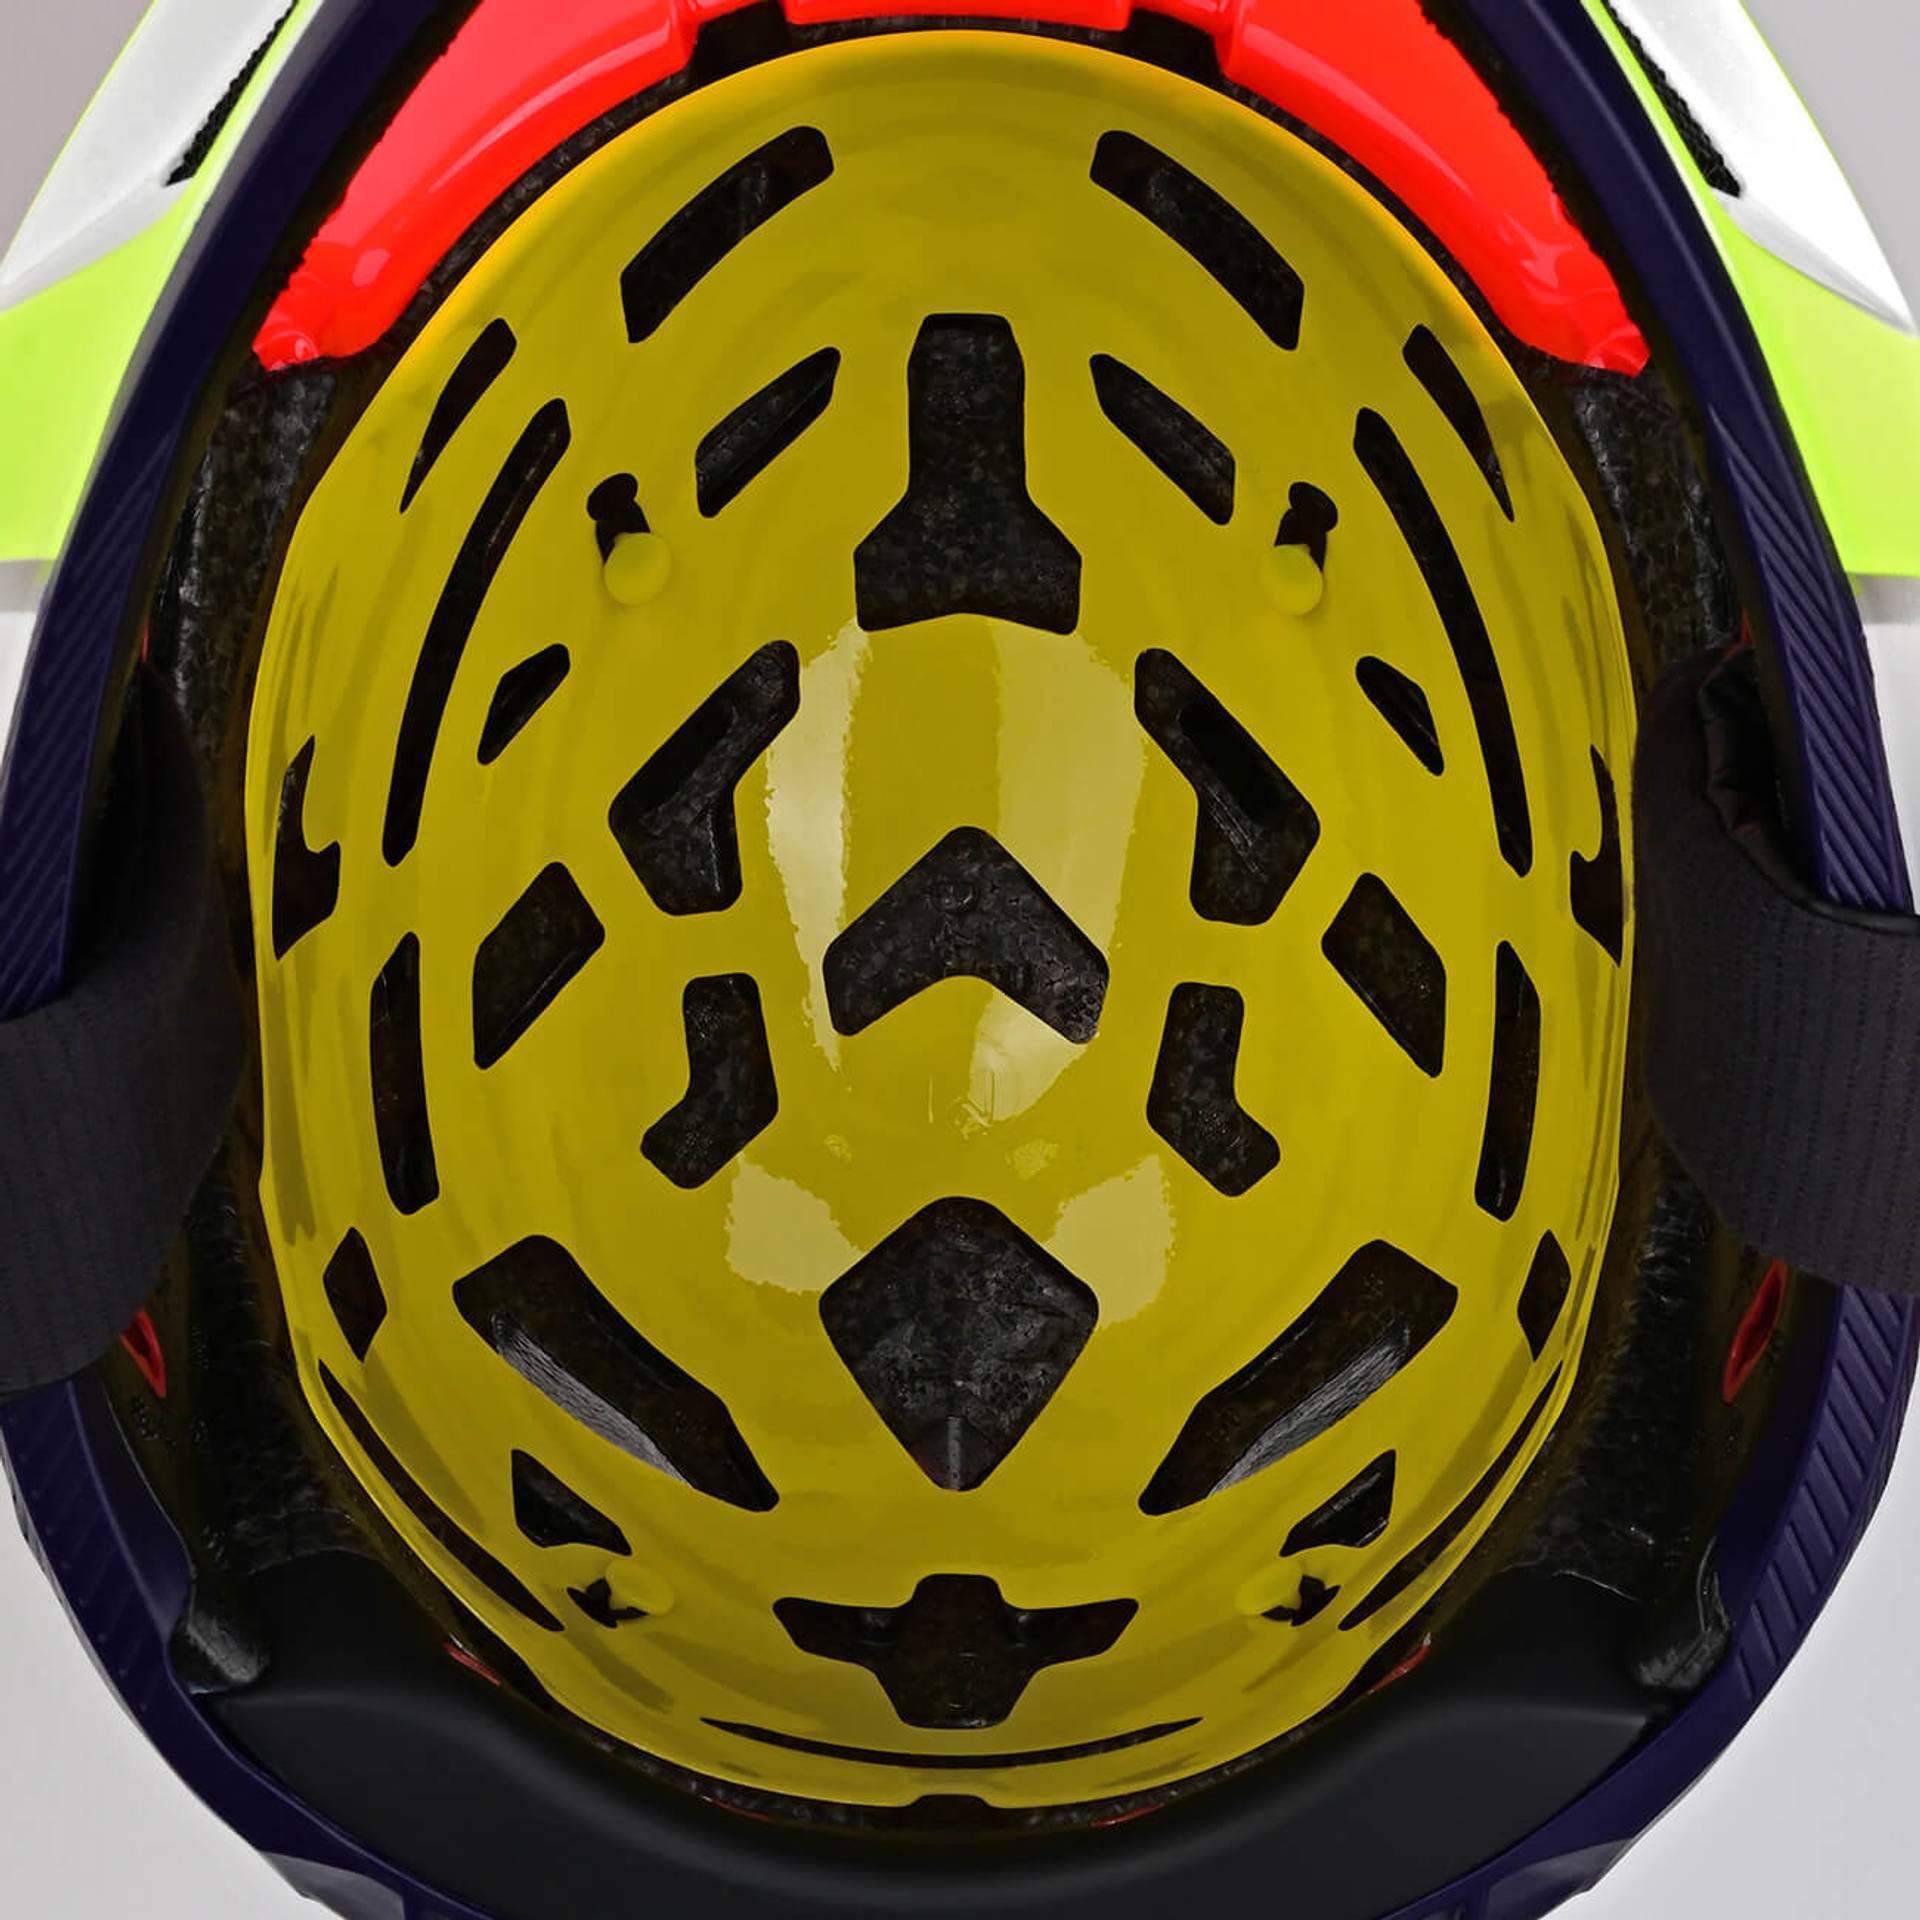 Troy Lee Designs D4 Composite Helmet w/MIPS Shadow - Cascade Bikes